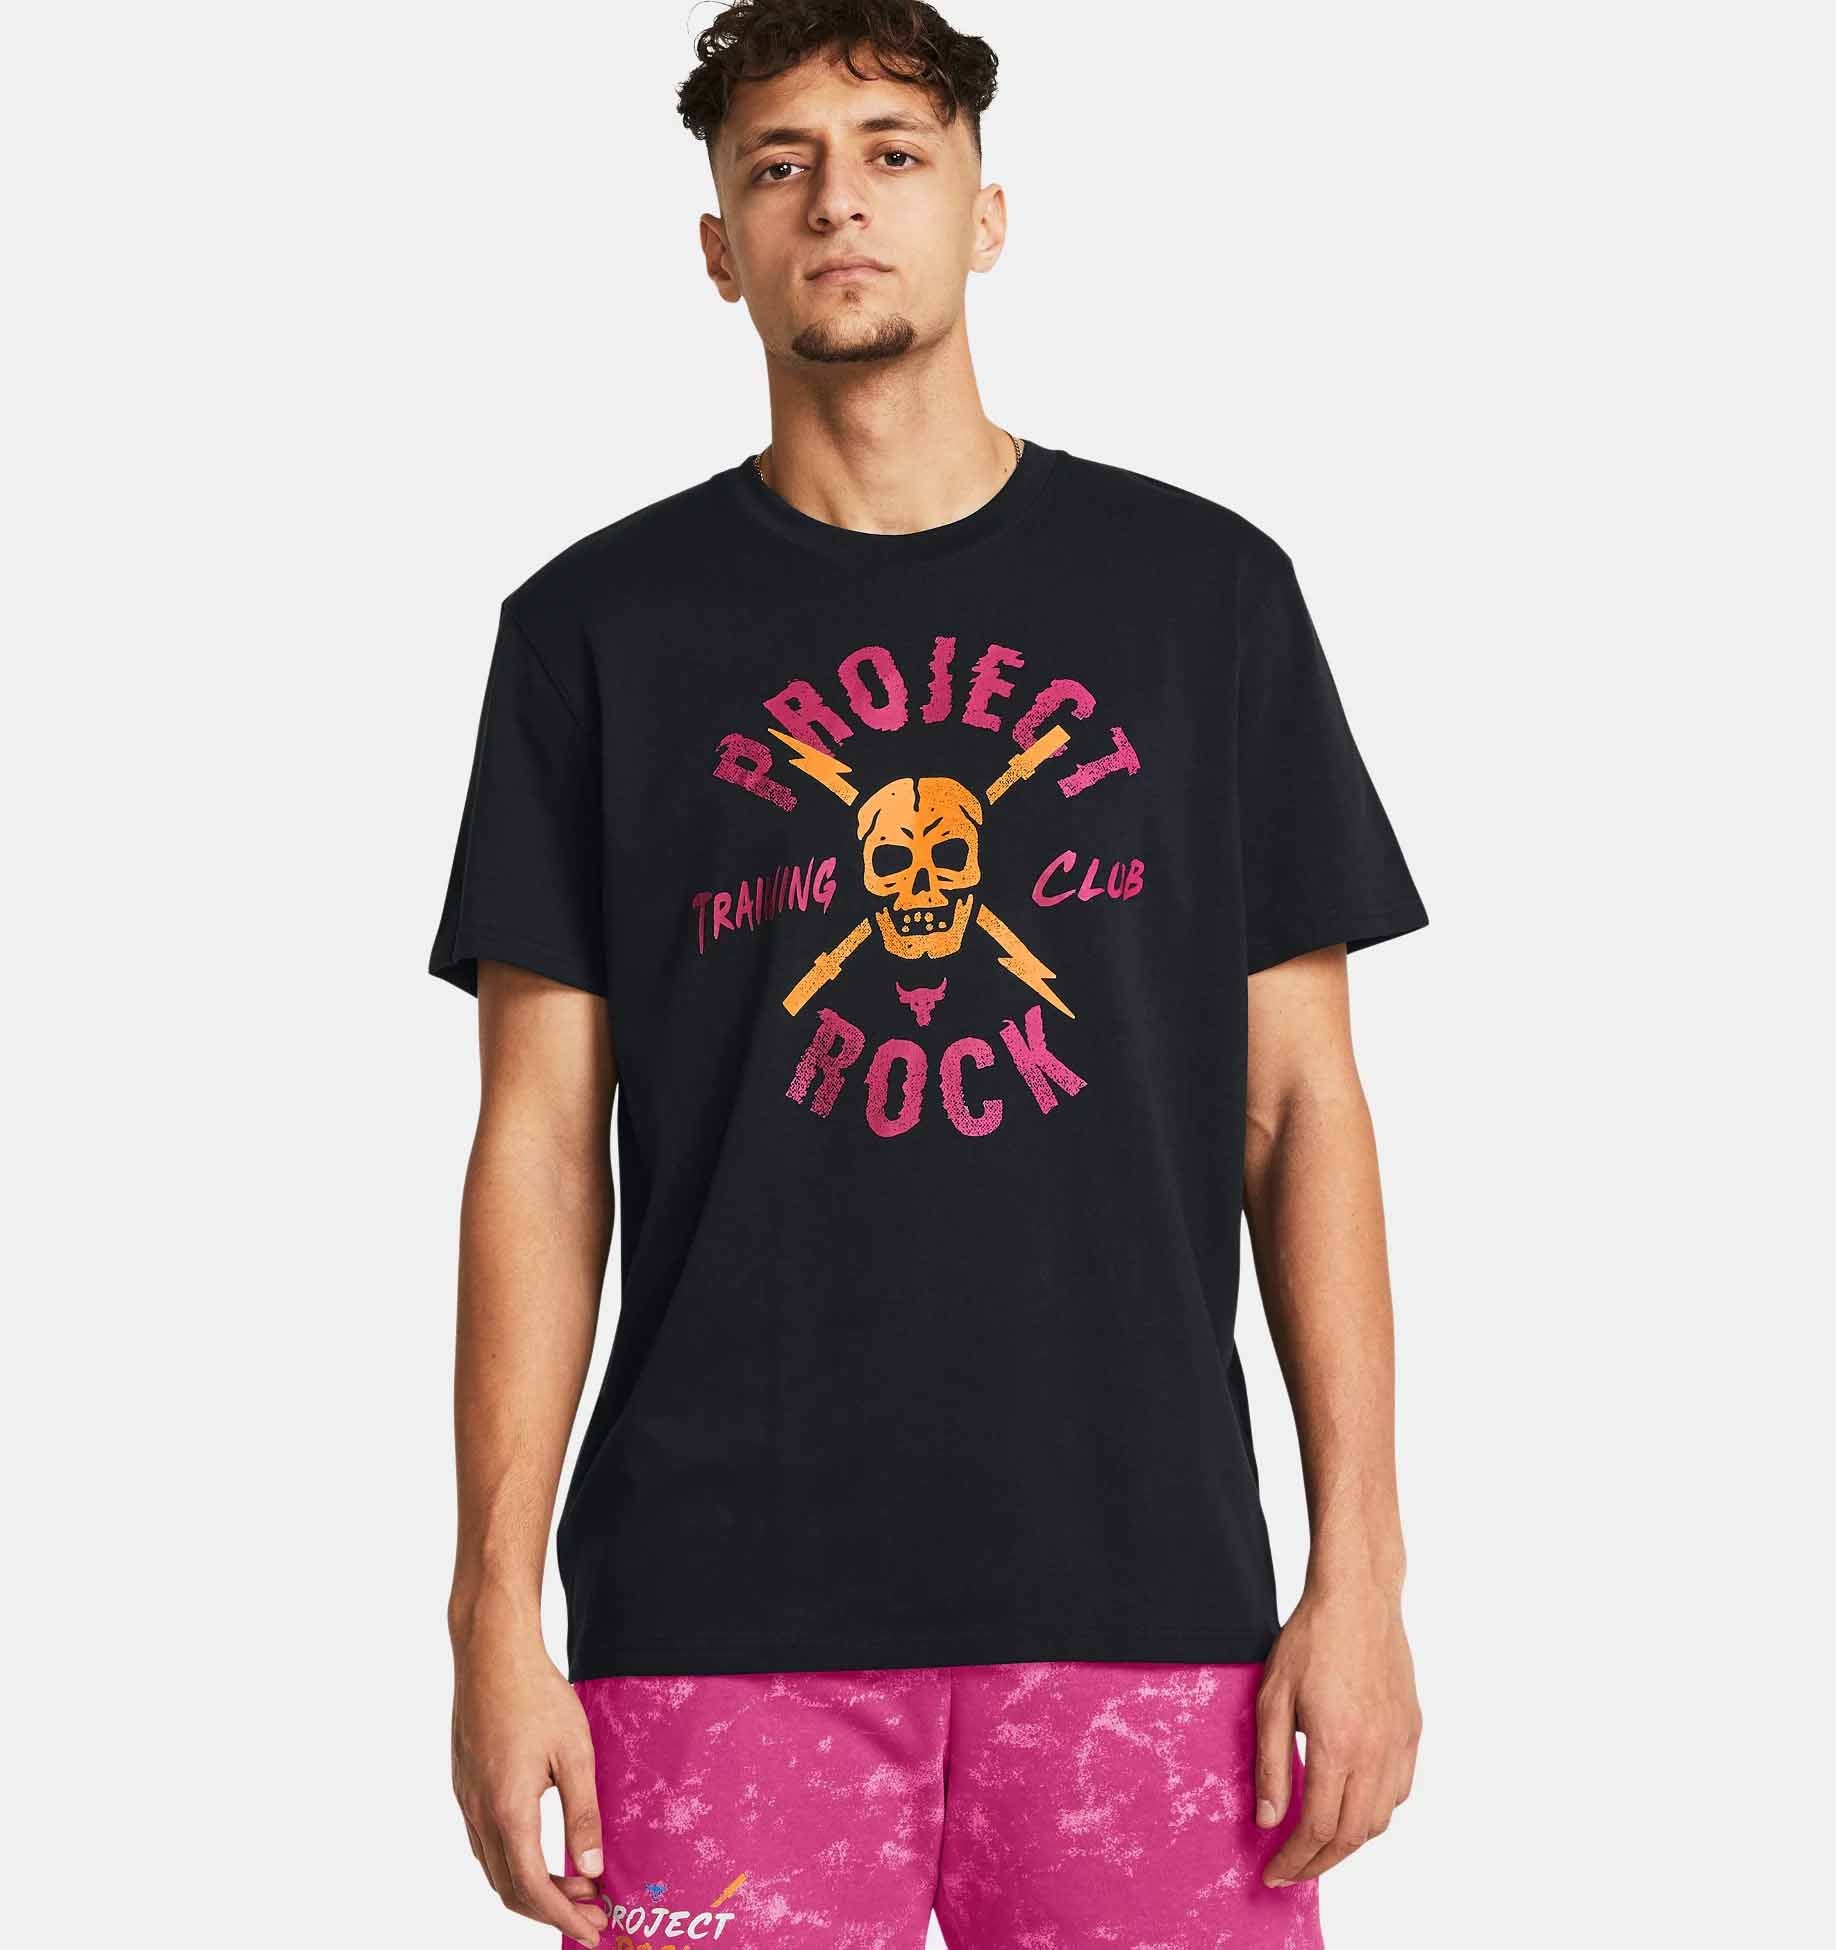 Project Rock TC Heavyweight Graphic Short Sleeve Shirt